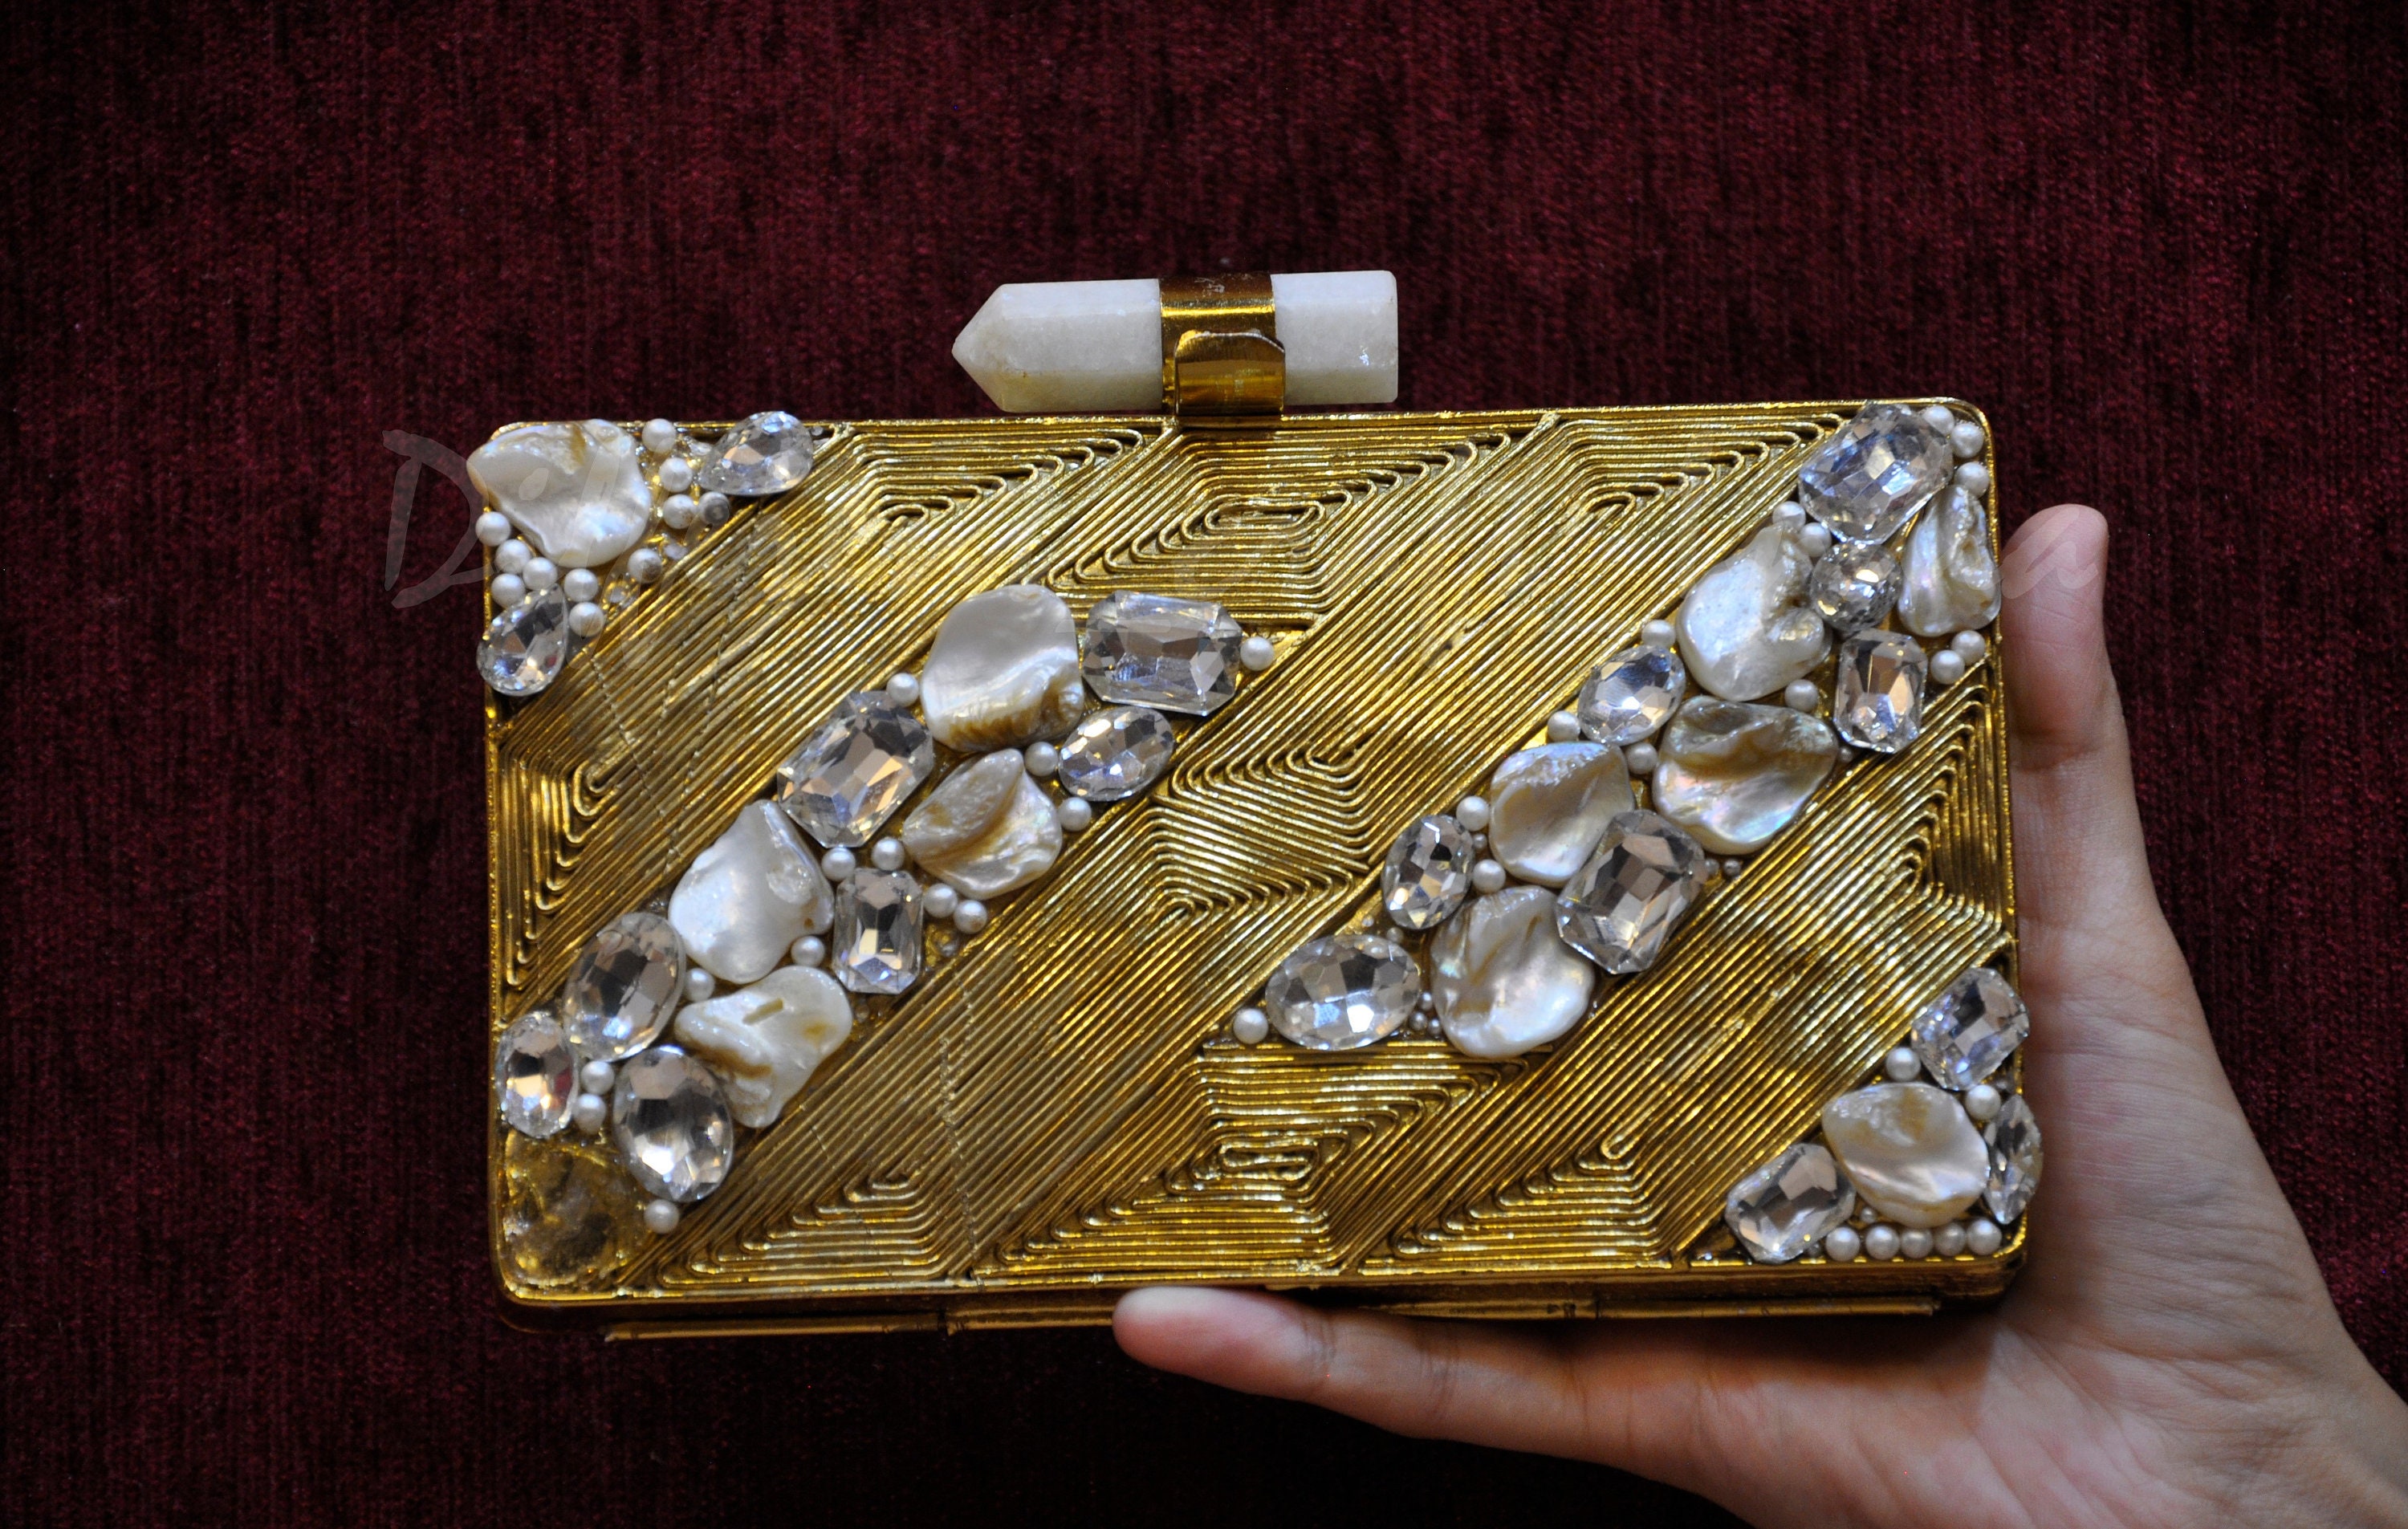 MOTHER OF PEARL Inlaid Brass handcrafted handbag, Wedding Designer clutch  purse